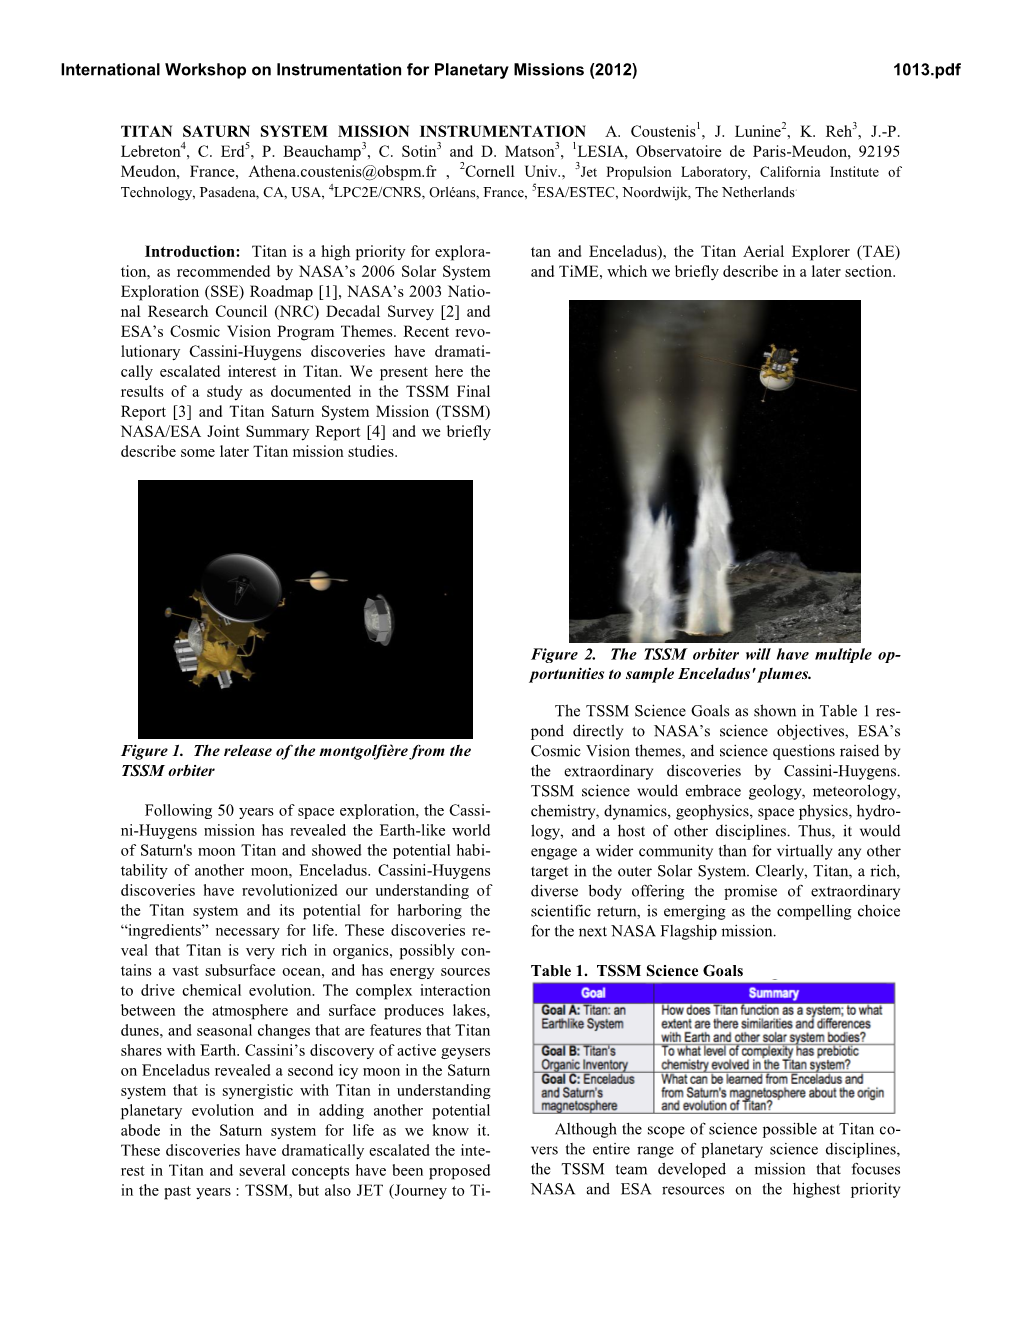 Titan Saturn System Mission Instrumentation A